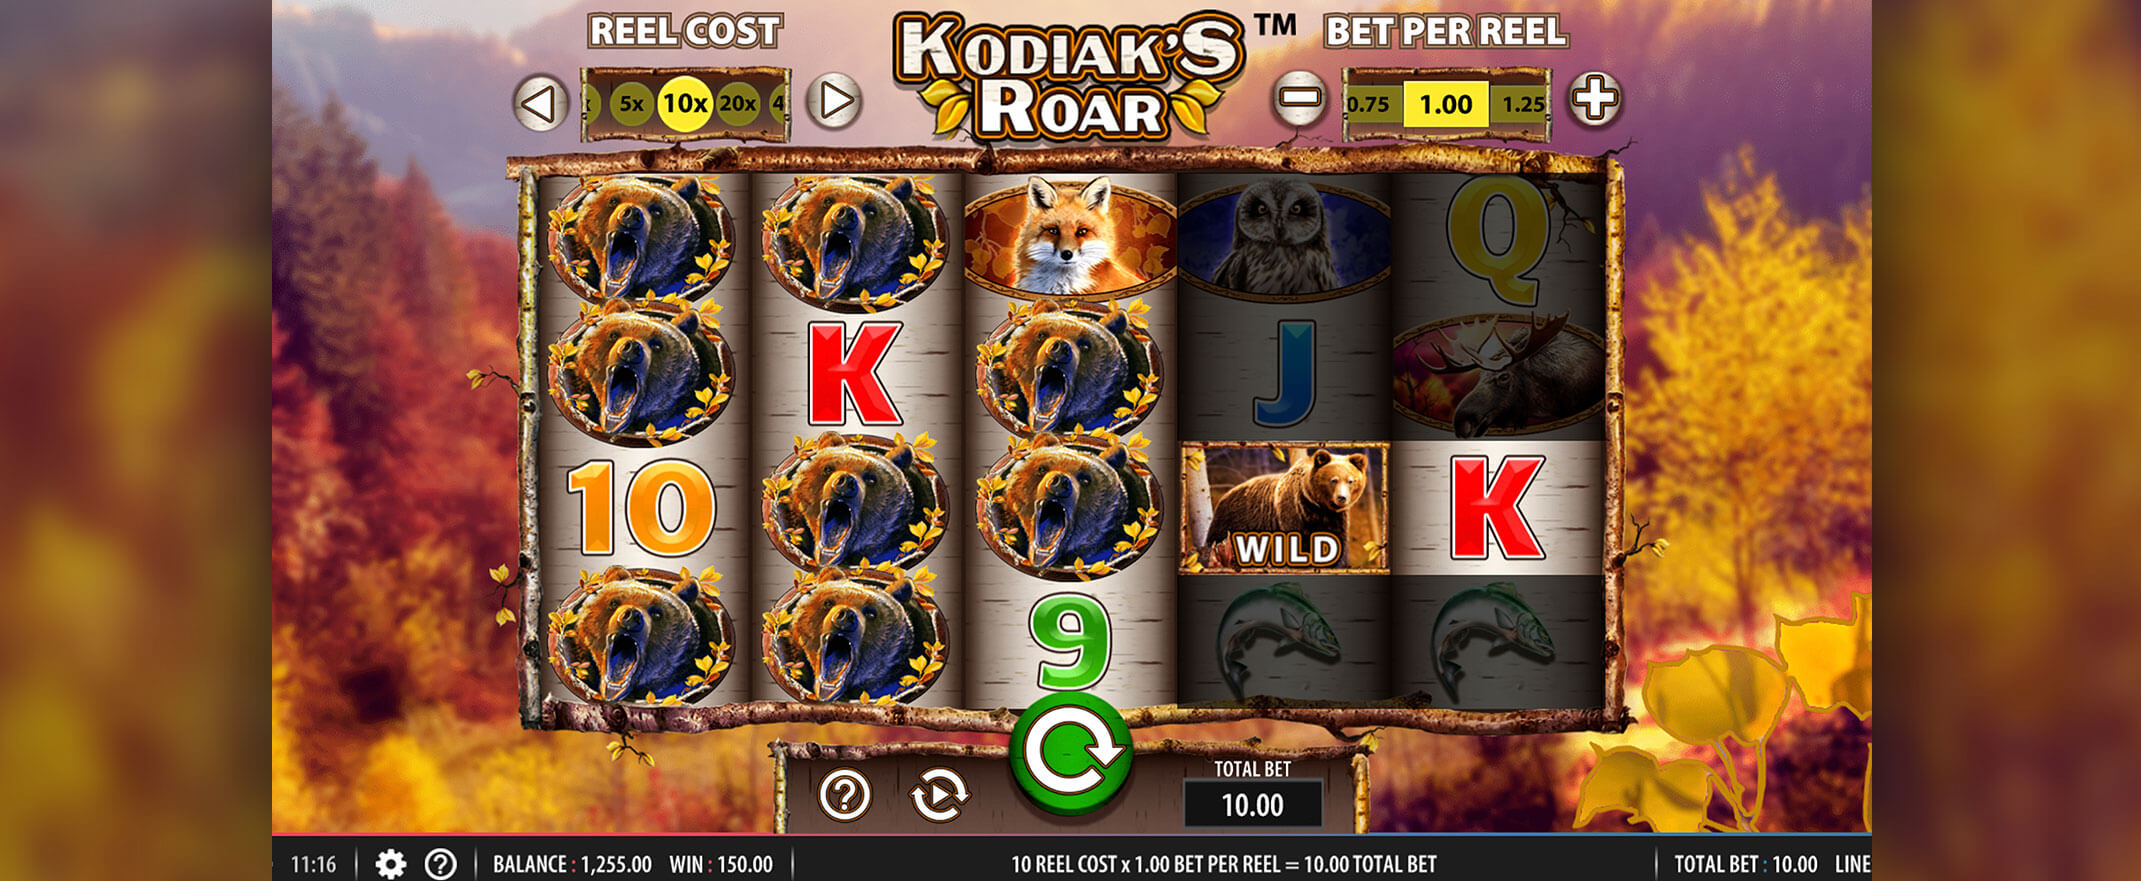 Kodiak’s Roar Spielautomaten Bewertung